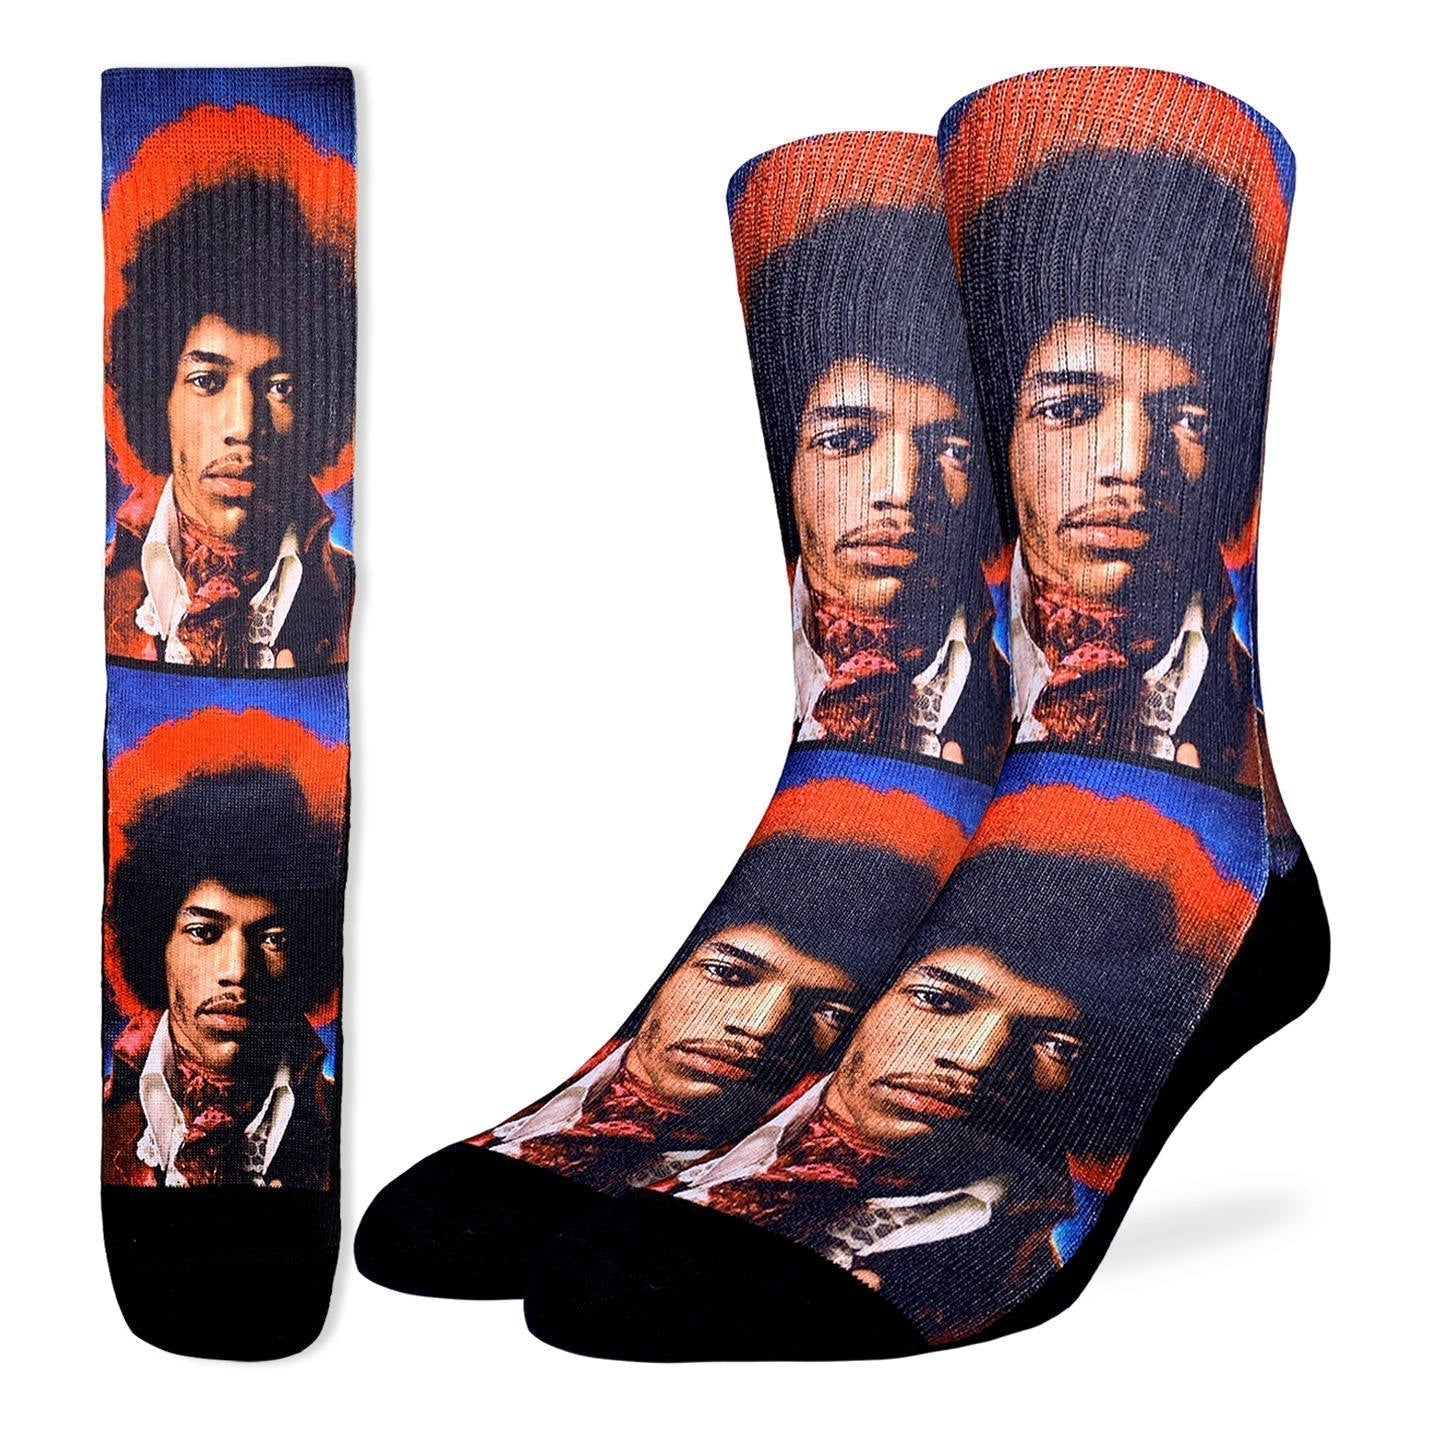 Jimi Hendrix Portrait Socks (Size 8-13)